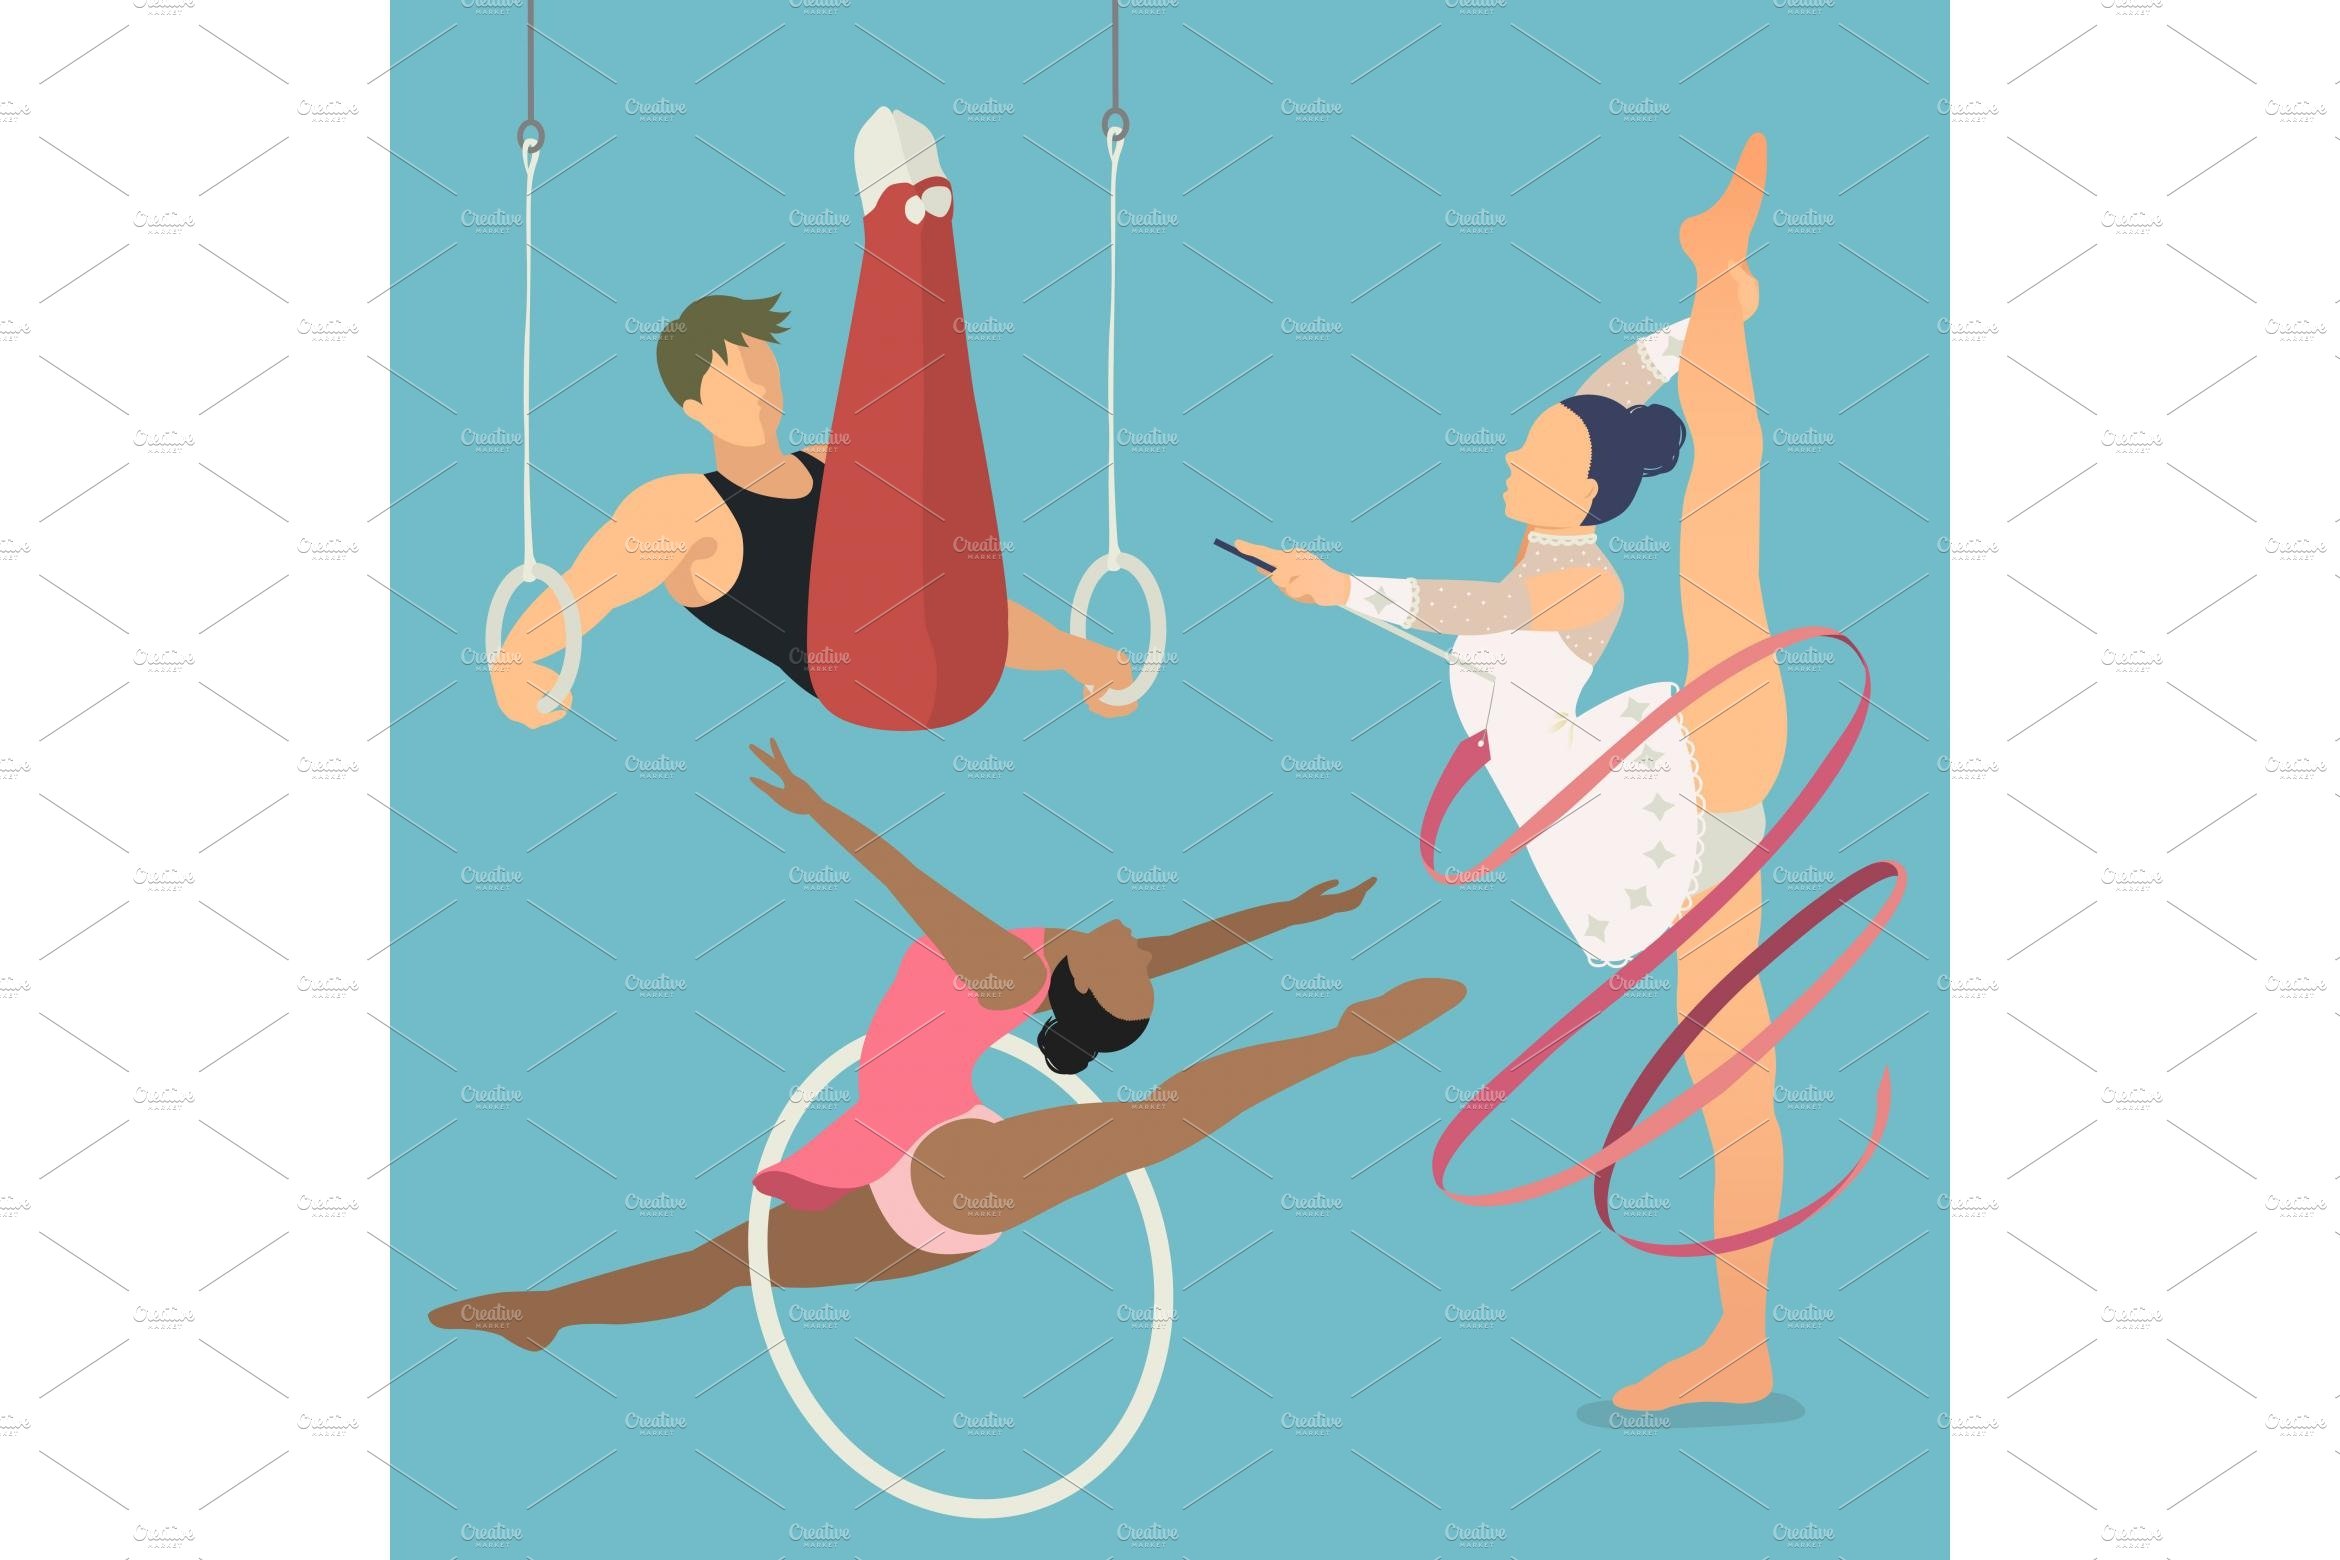 Rhythmic and artistic gymnastics cover image.